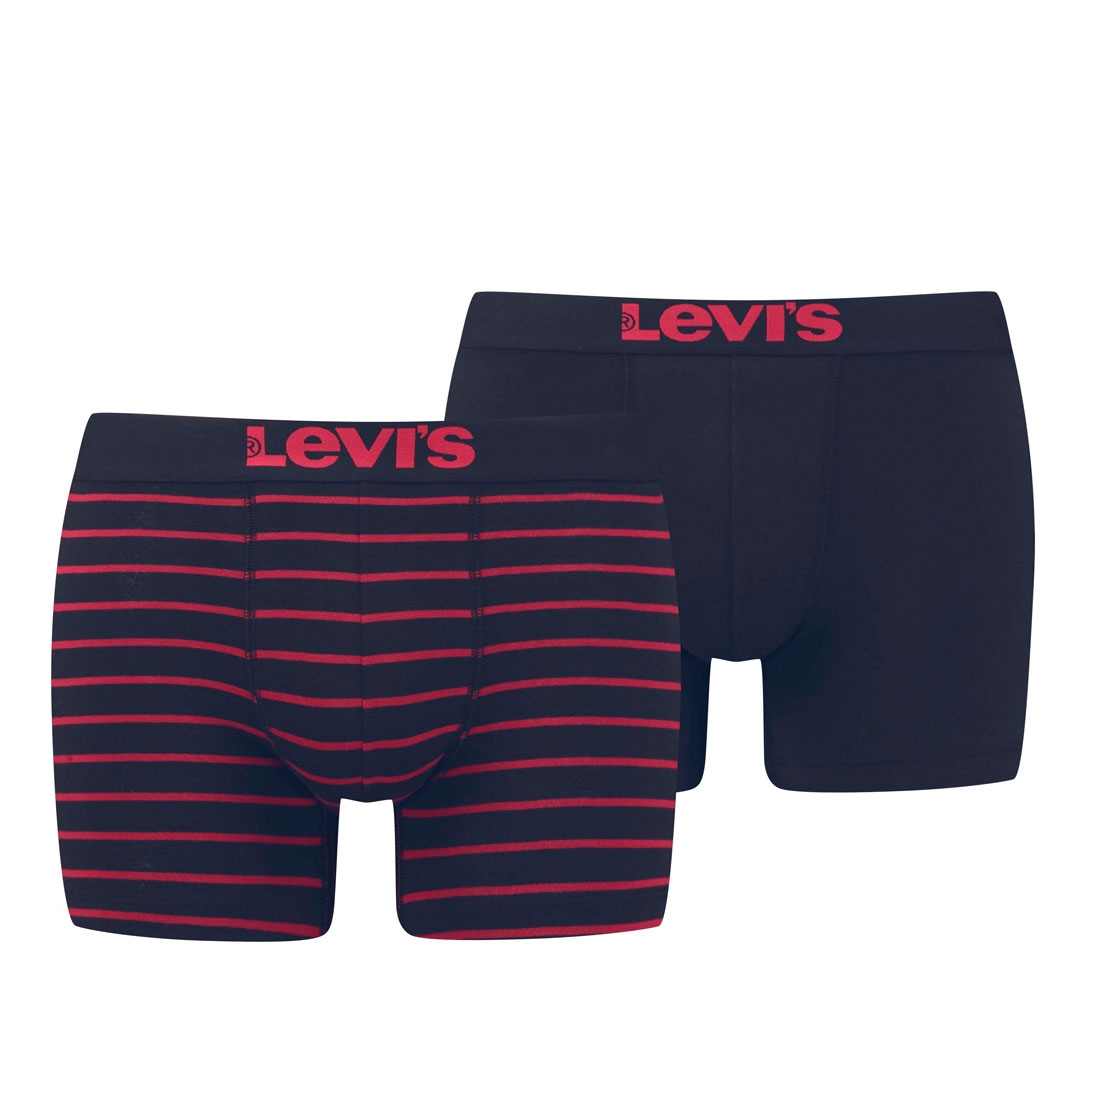 2er Pack Levis Men Vintage Stripe YD B Boxer Brief Boxershorts Unterhose Pant Unterwäsche